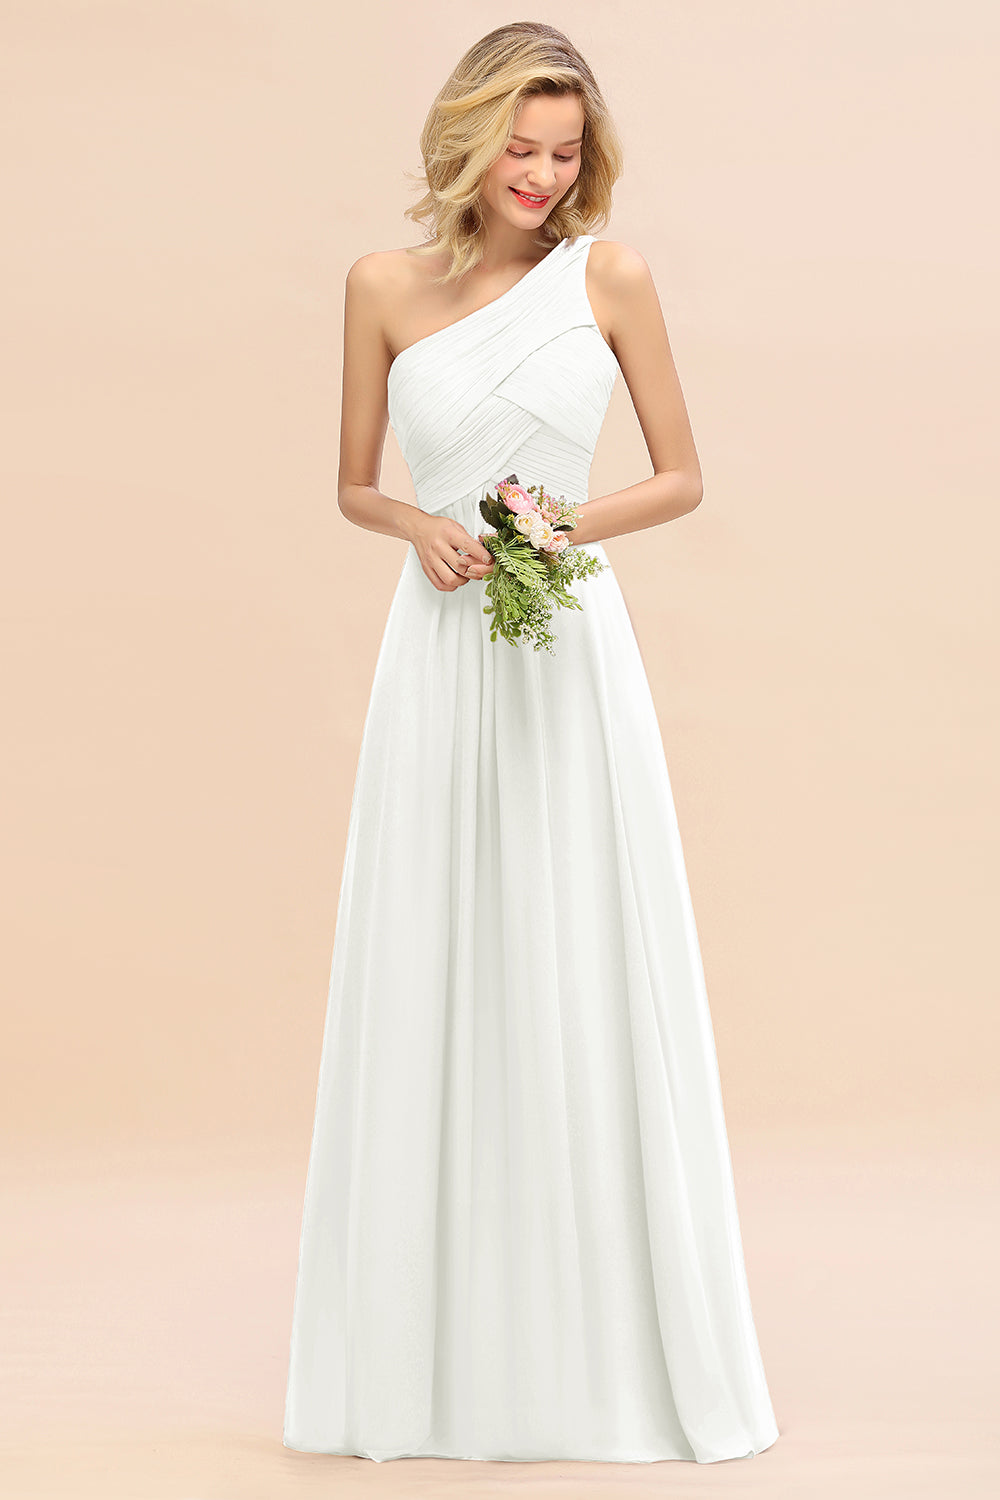 Load image into Gallery viewer, Elegant Long One Shoulder Chiffon Bridesmaid Dress-BIZTUNNEL
